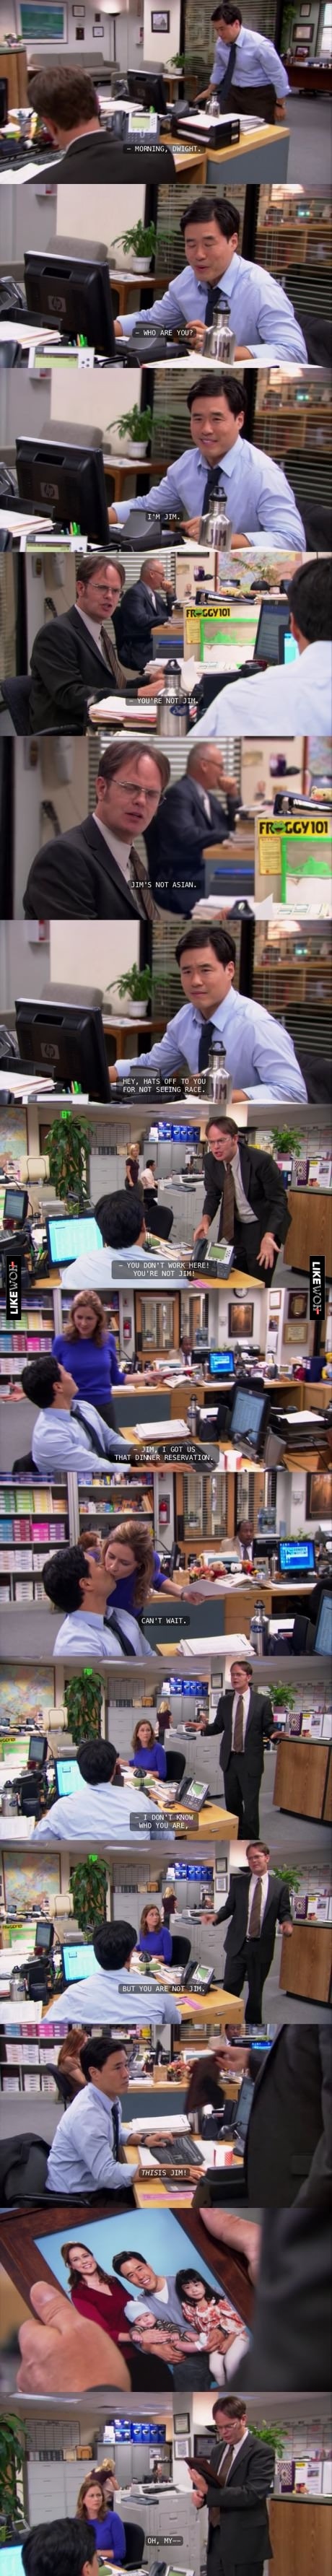 Dwight being Dwight